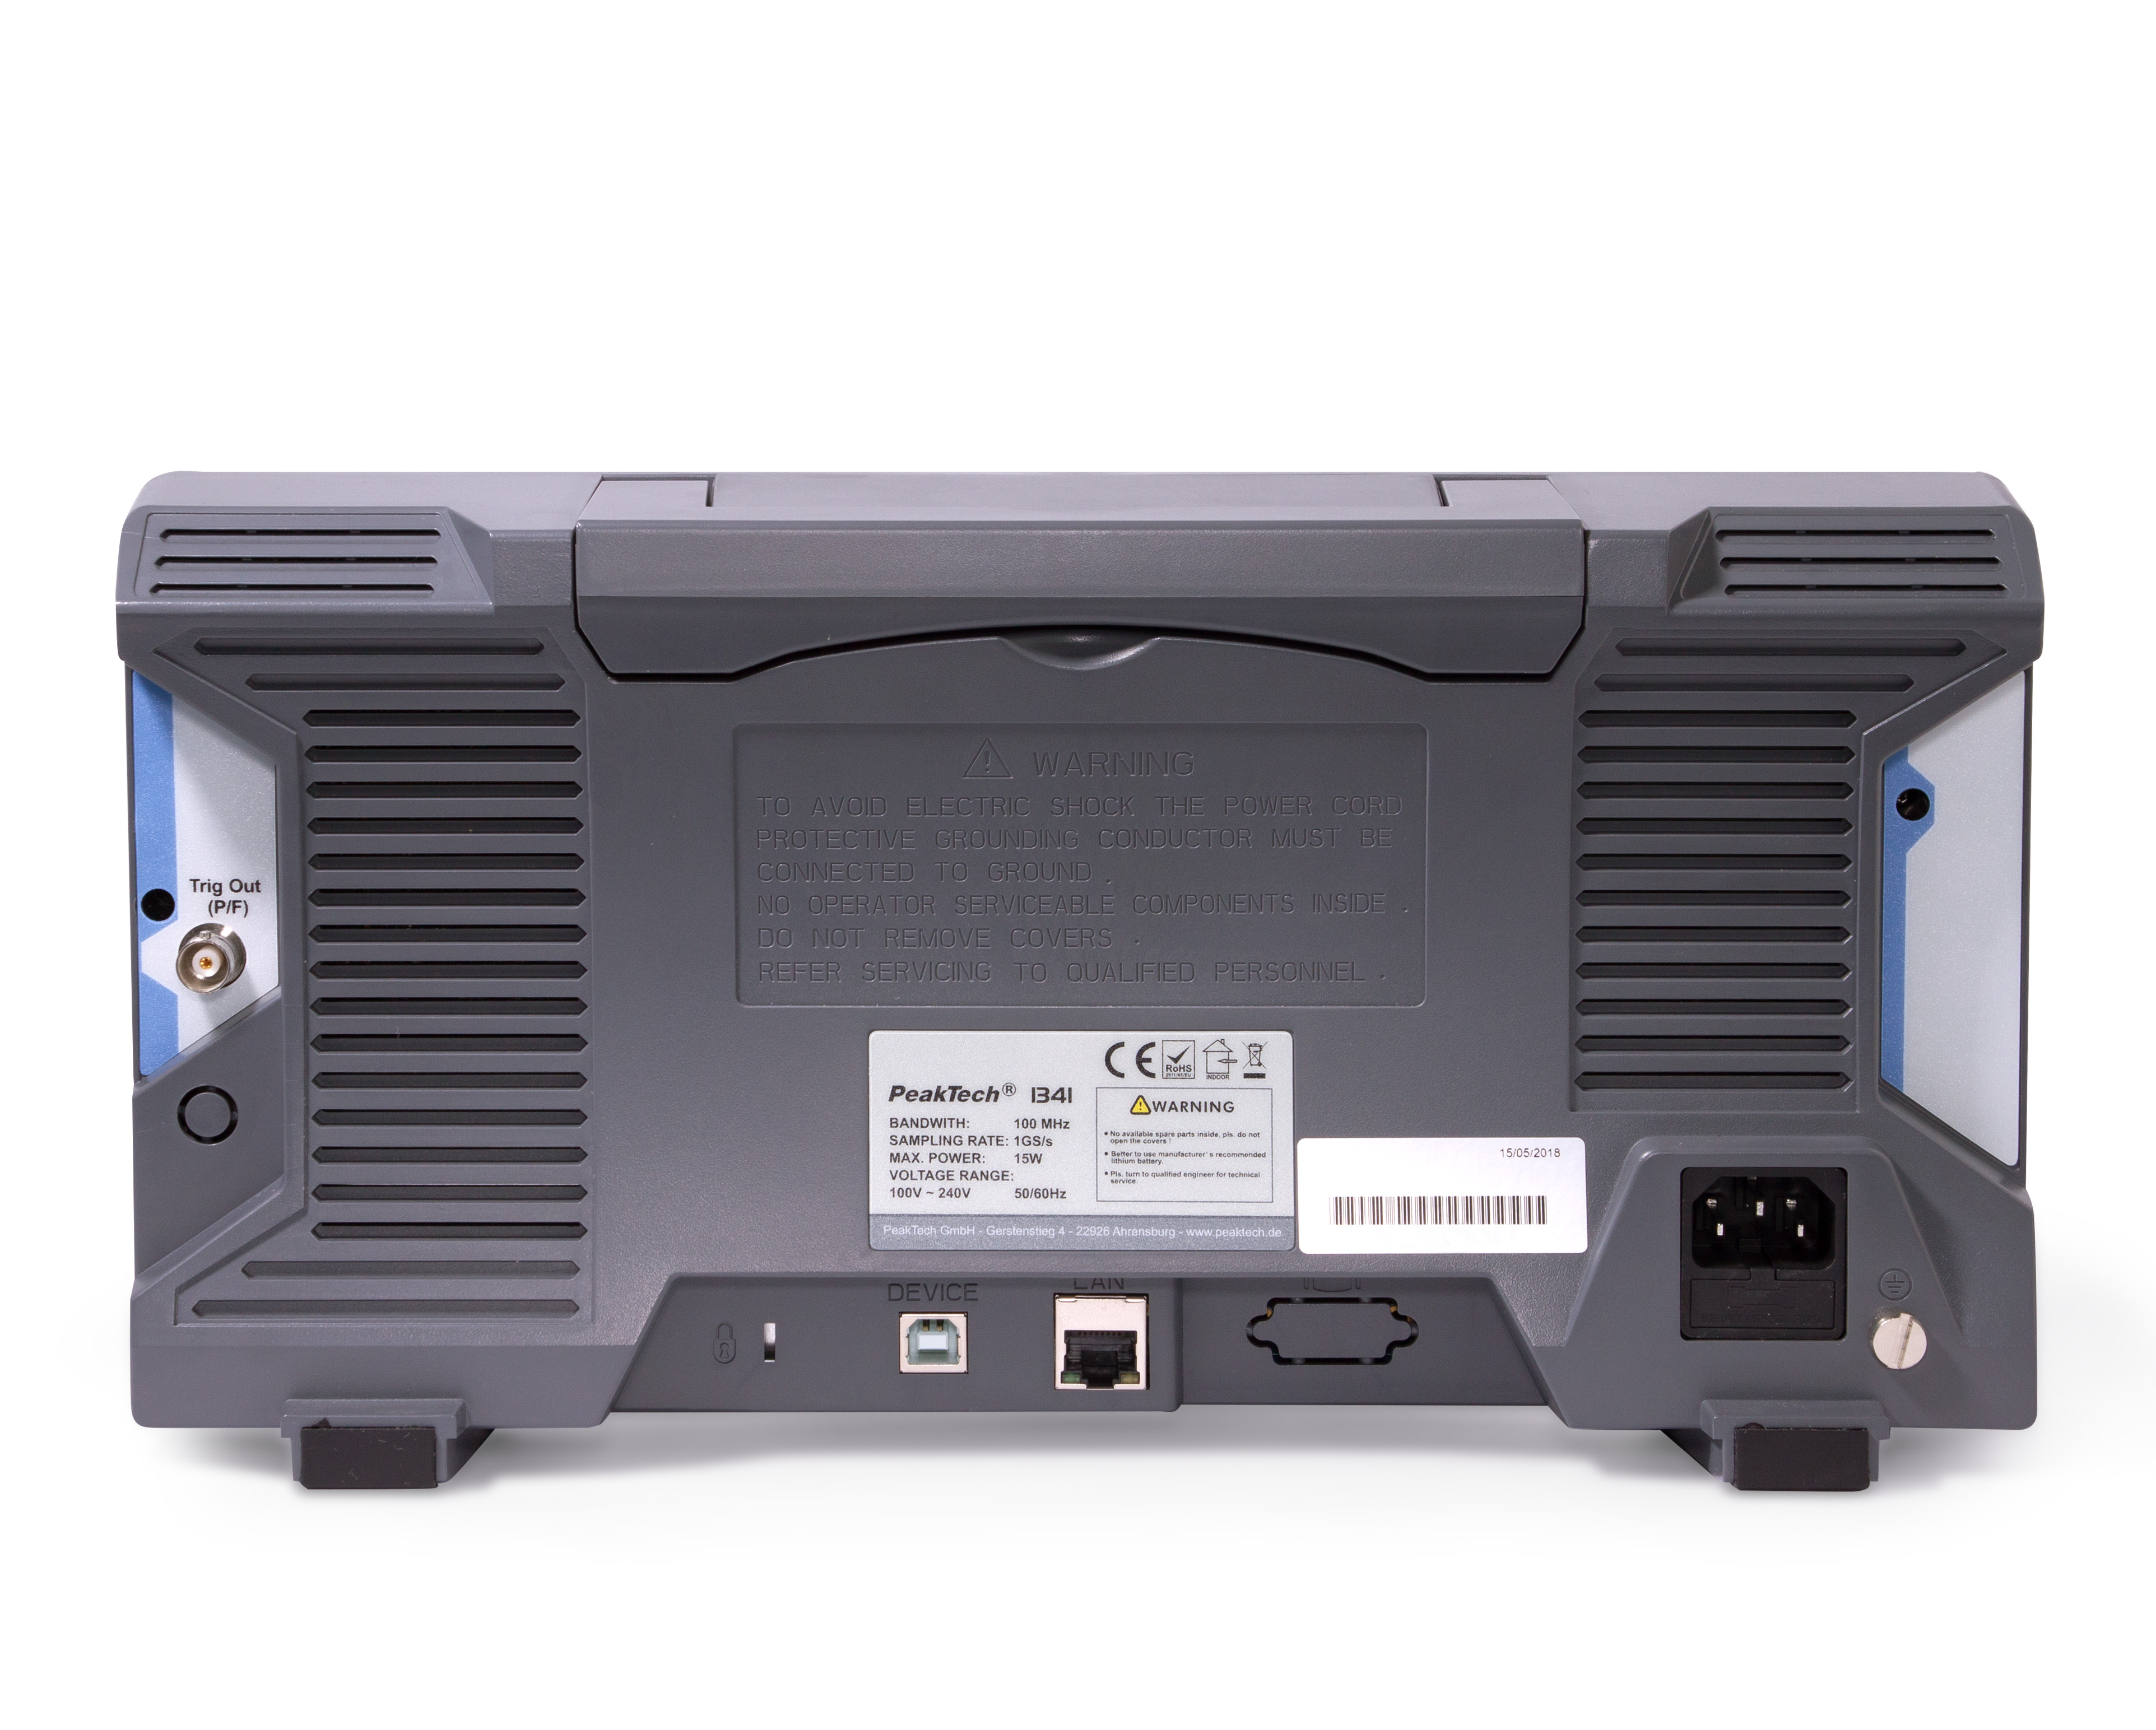 «PeakTech® P 1340» 60 MHz / 4 CH, 1 GS/s digital storage oscilloscope